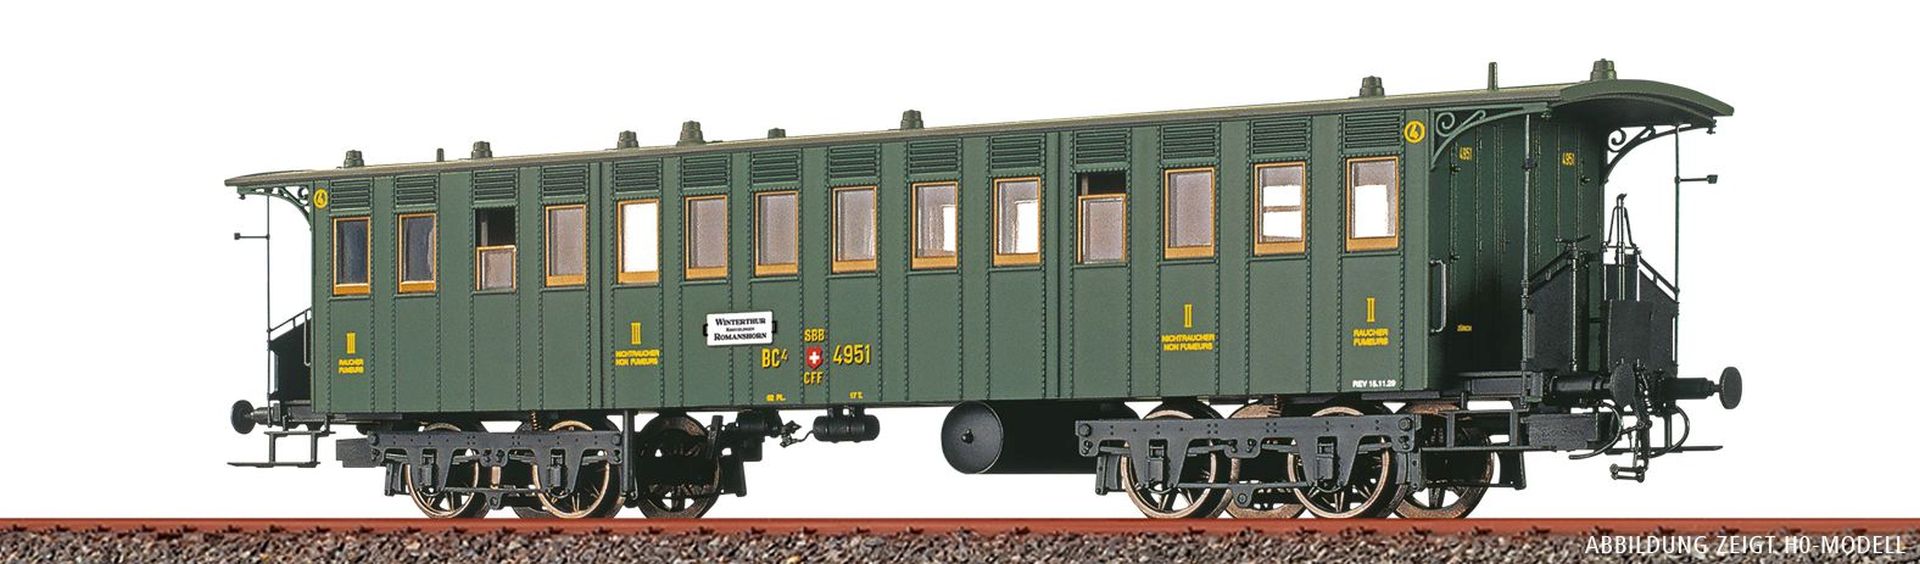 Brawa 65086 - Personenwagen BC4, SBB, Ep.II